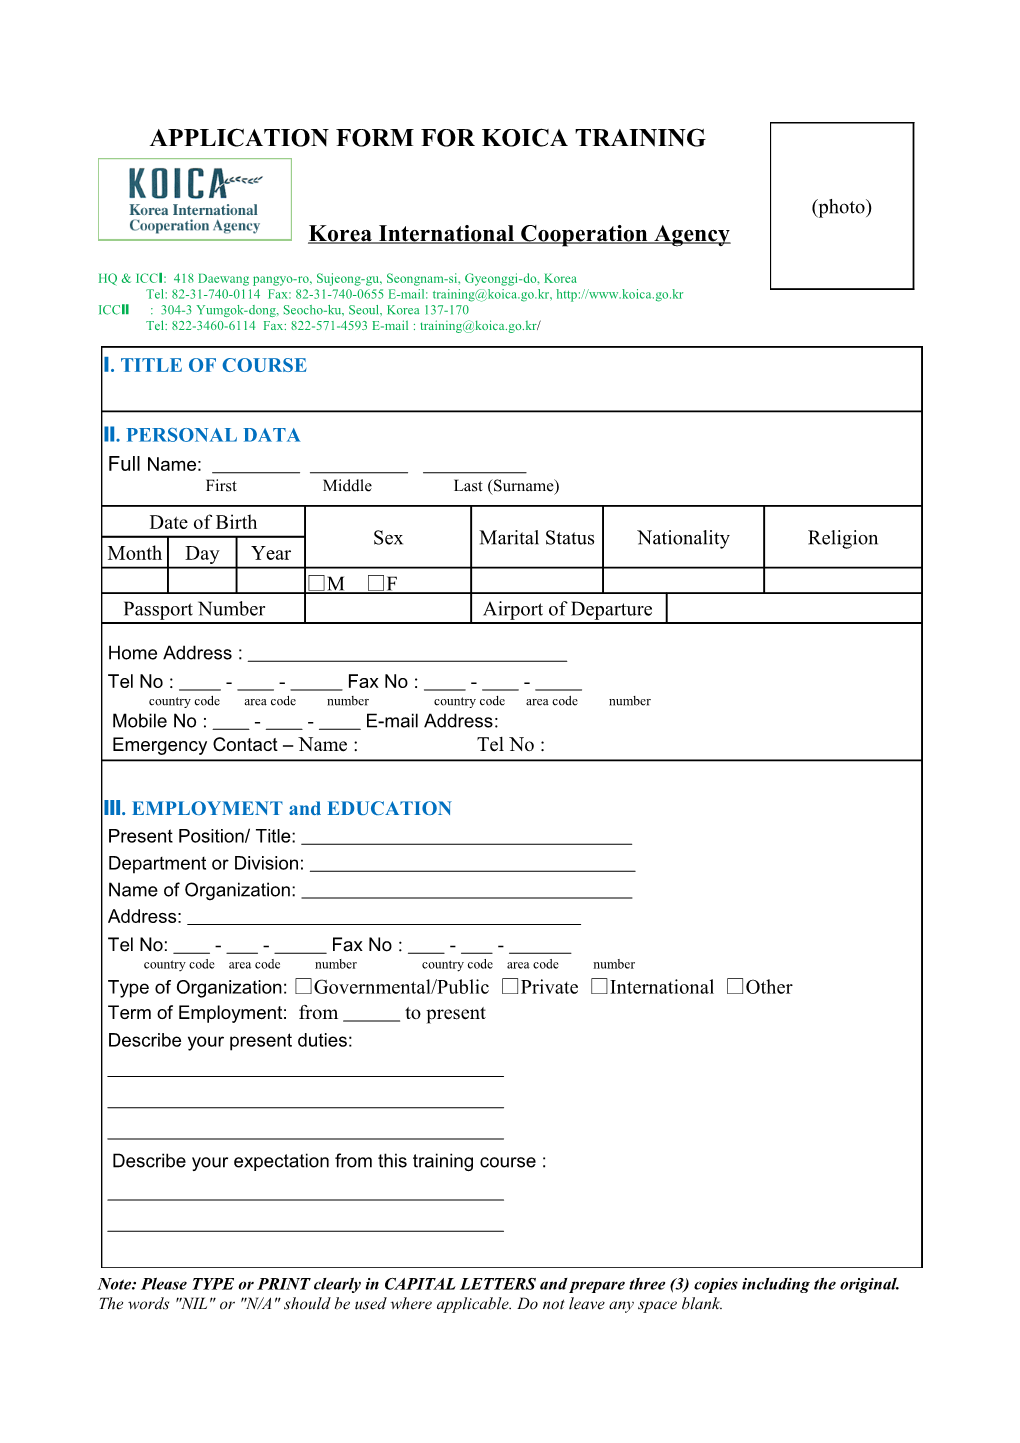 Application Form for KOICA Training Program